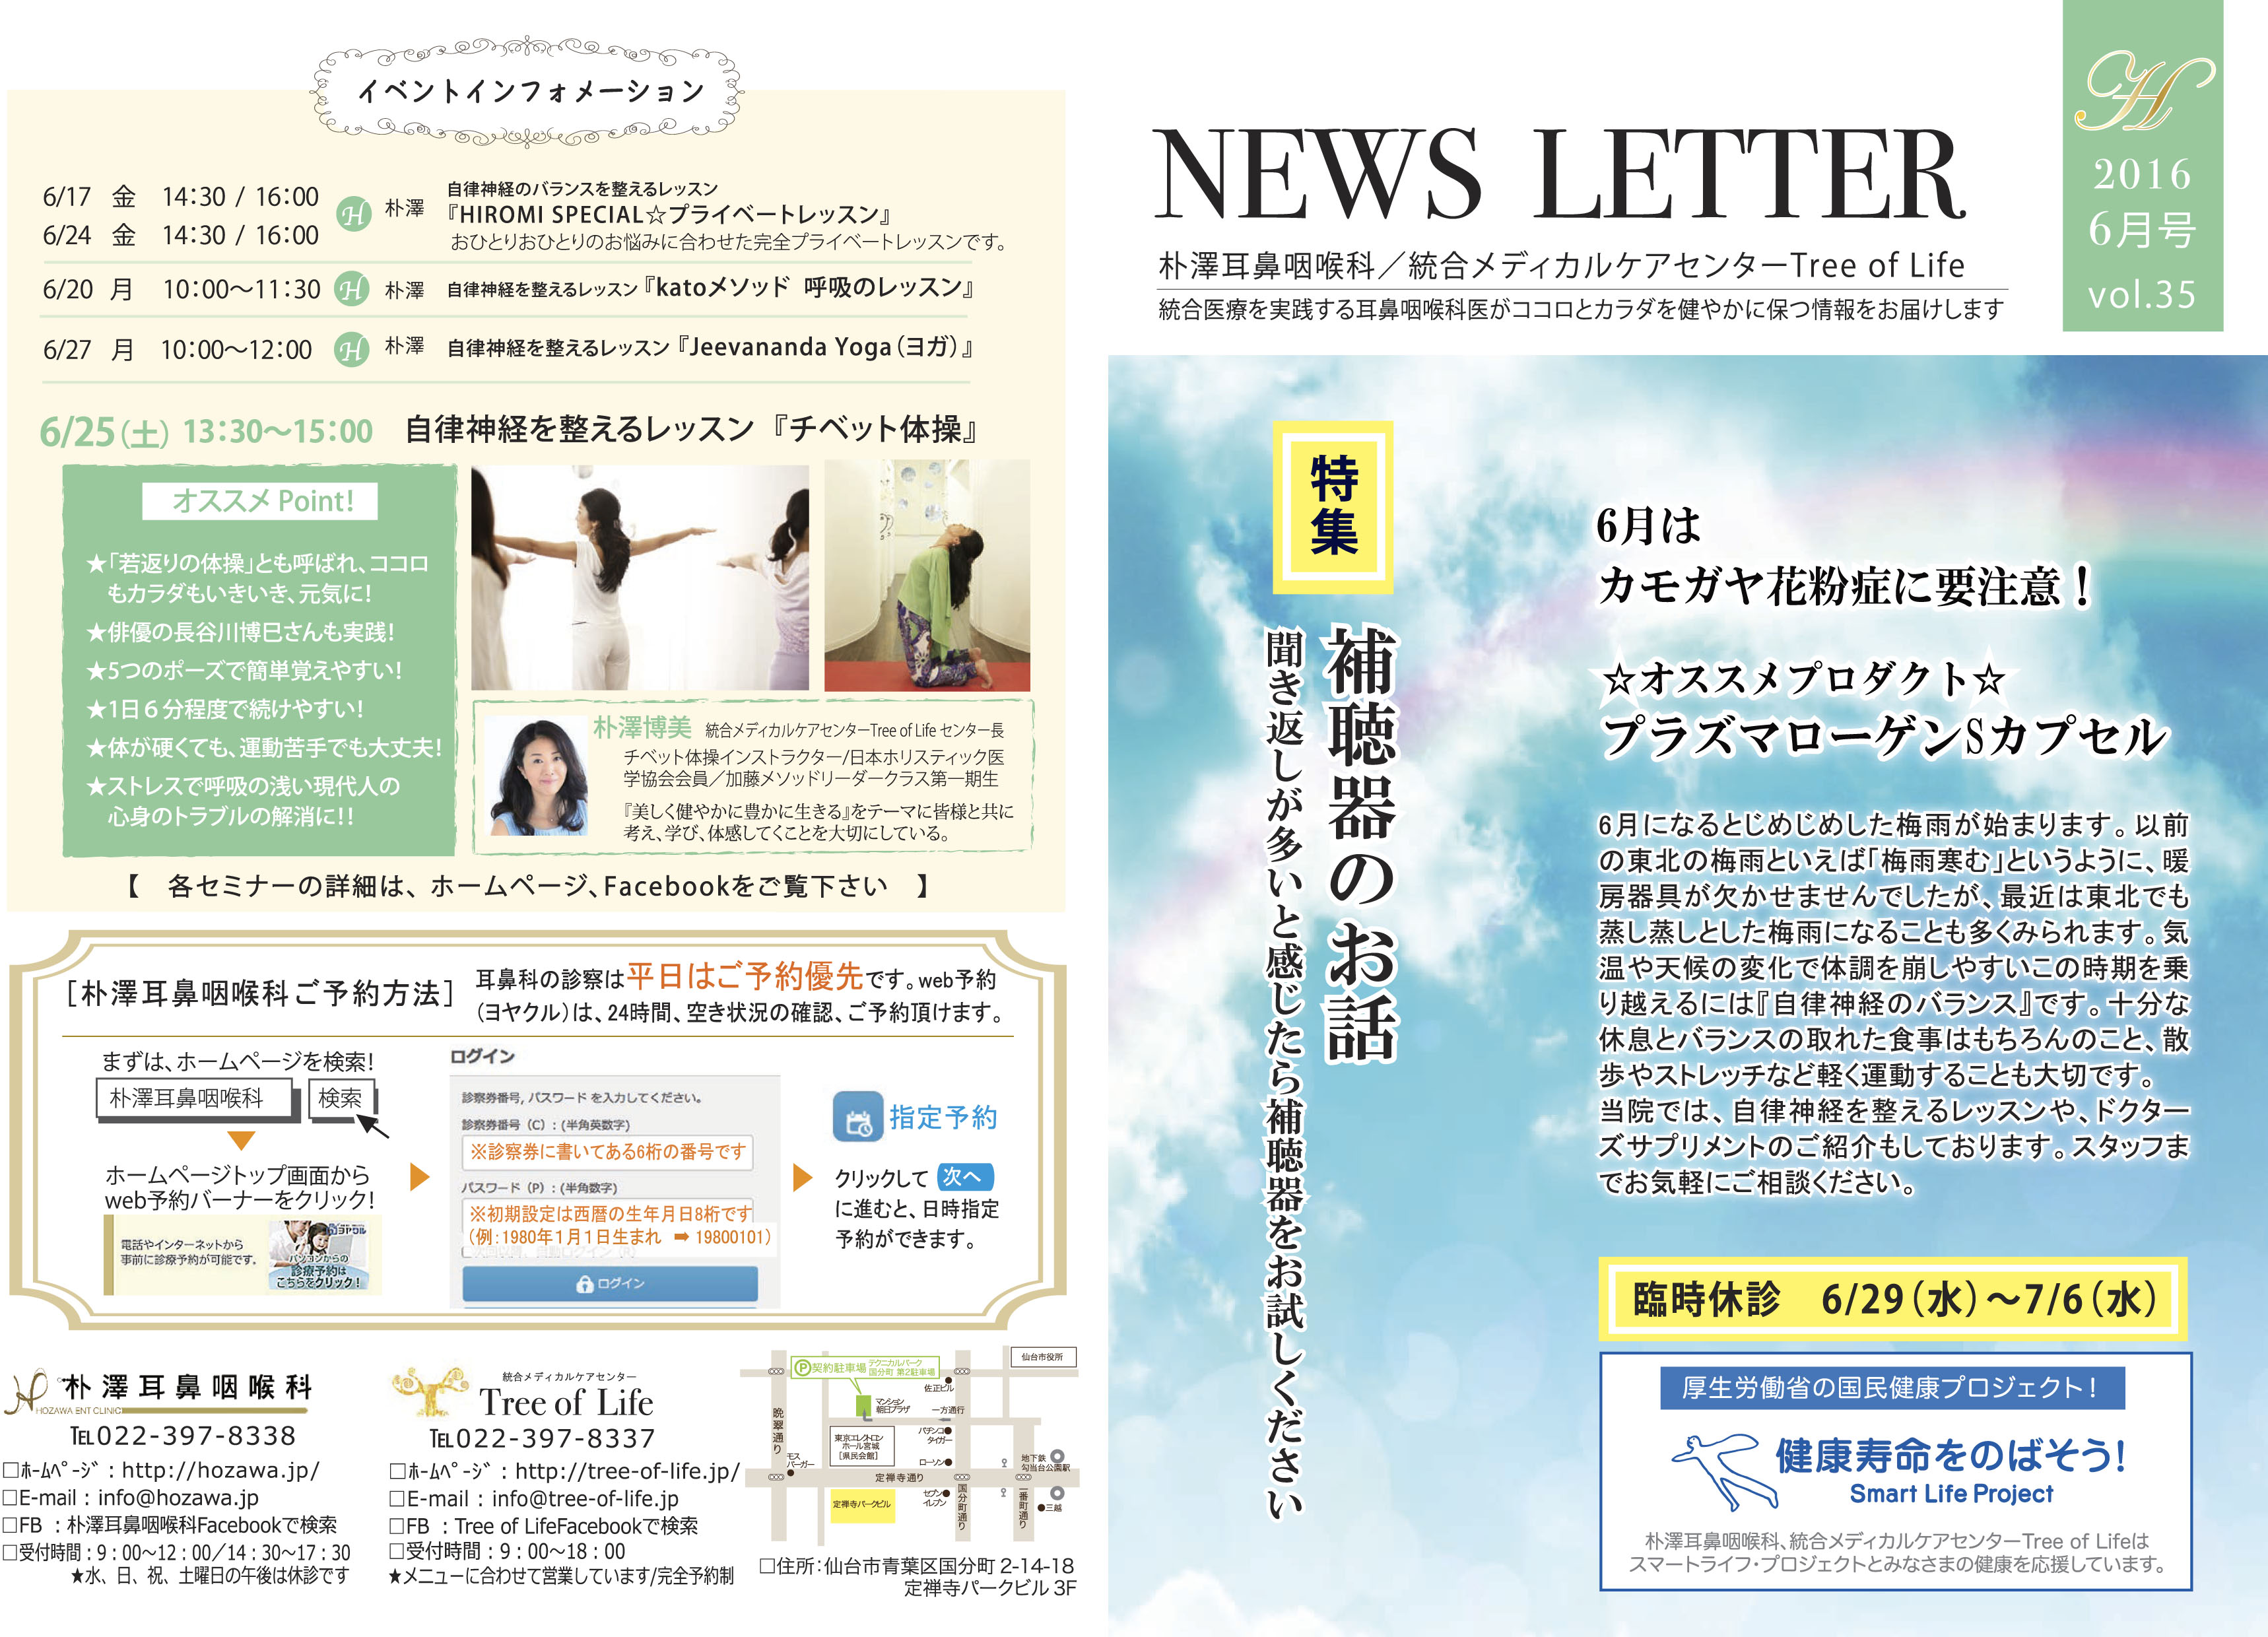 http://hozawa.jp/news/news_img/1605230355_01L-1-1.jpg